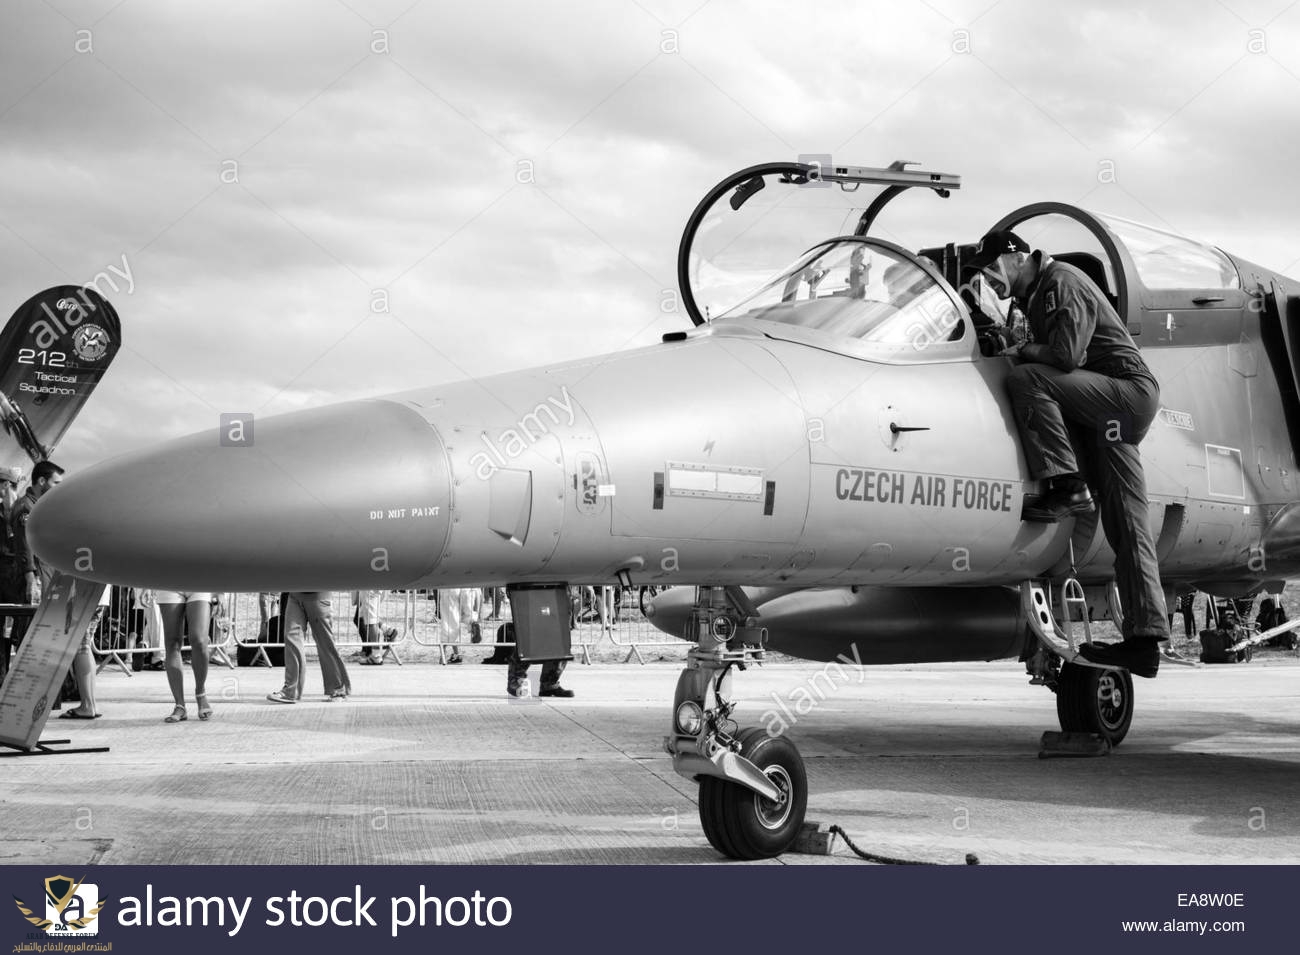 a-young-boy-gets-shown-a-czech-air-force-aero-l-159-alca-multi-role-EA8W0E.jpg